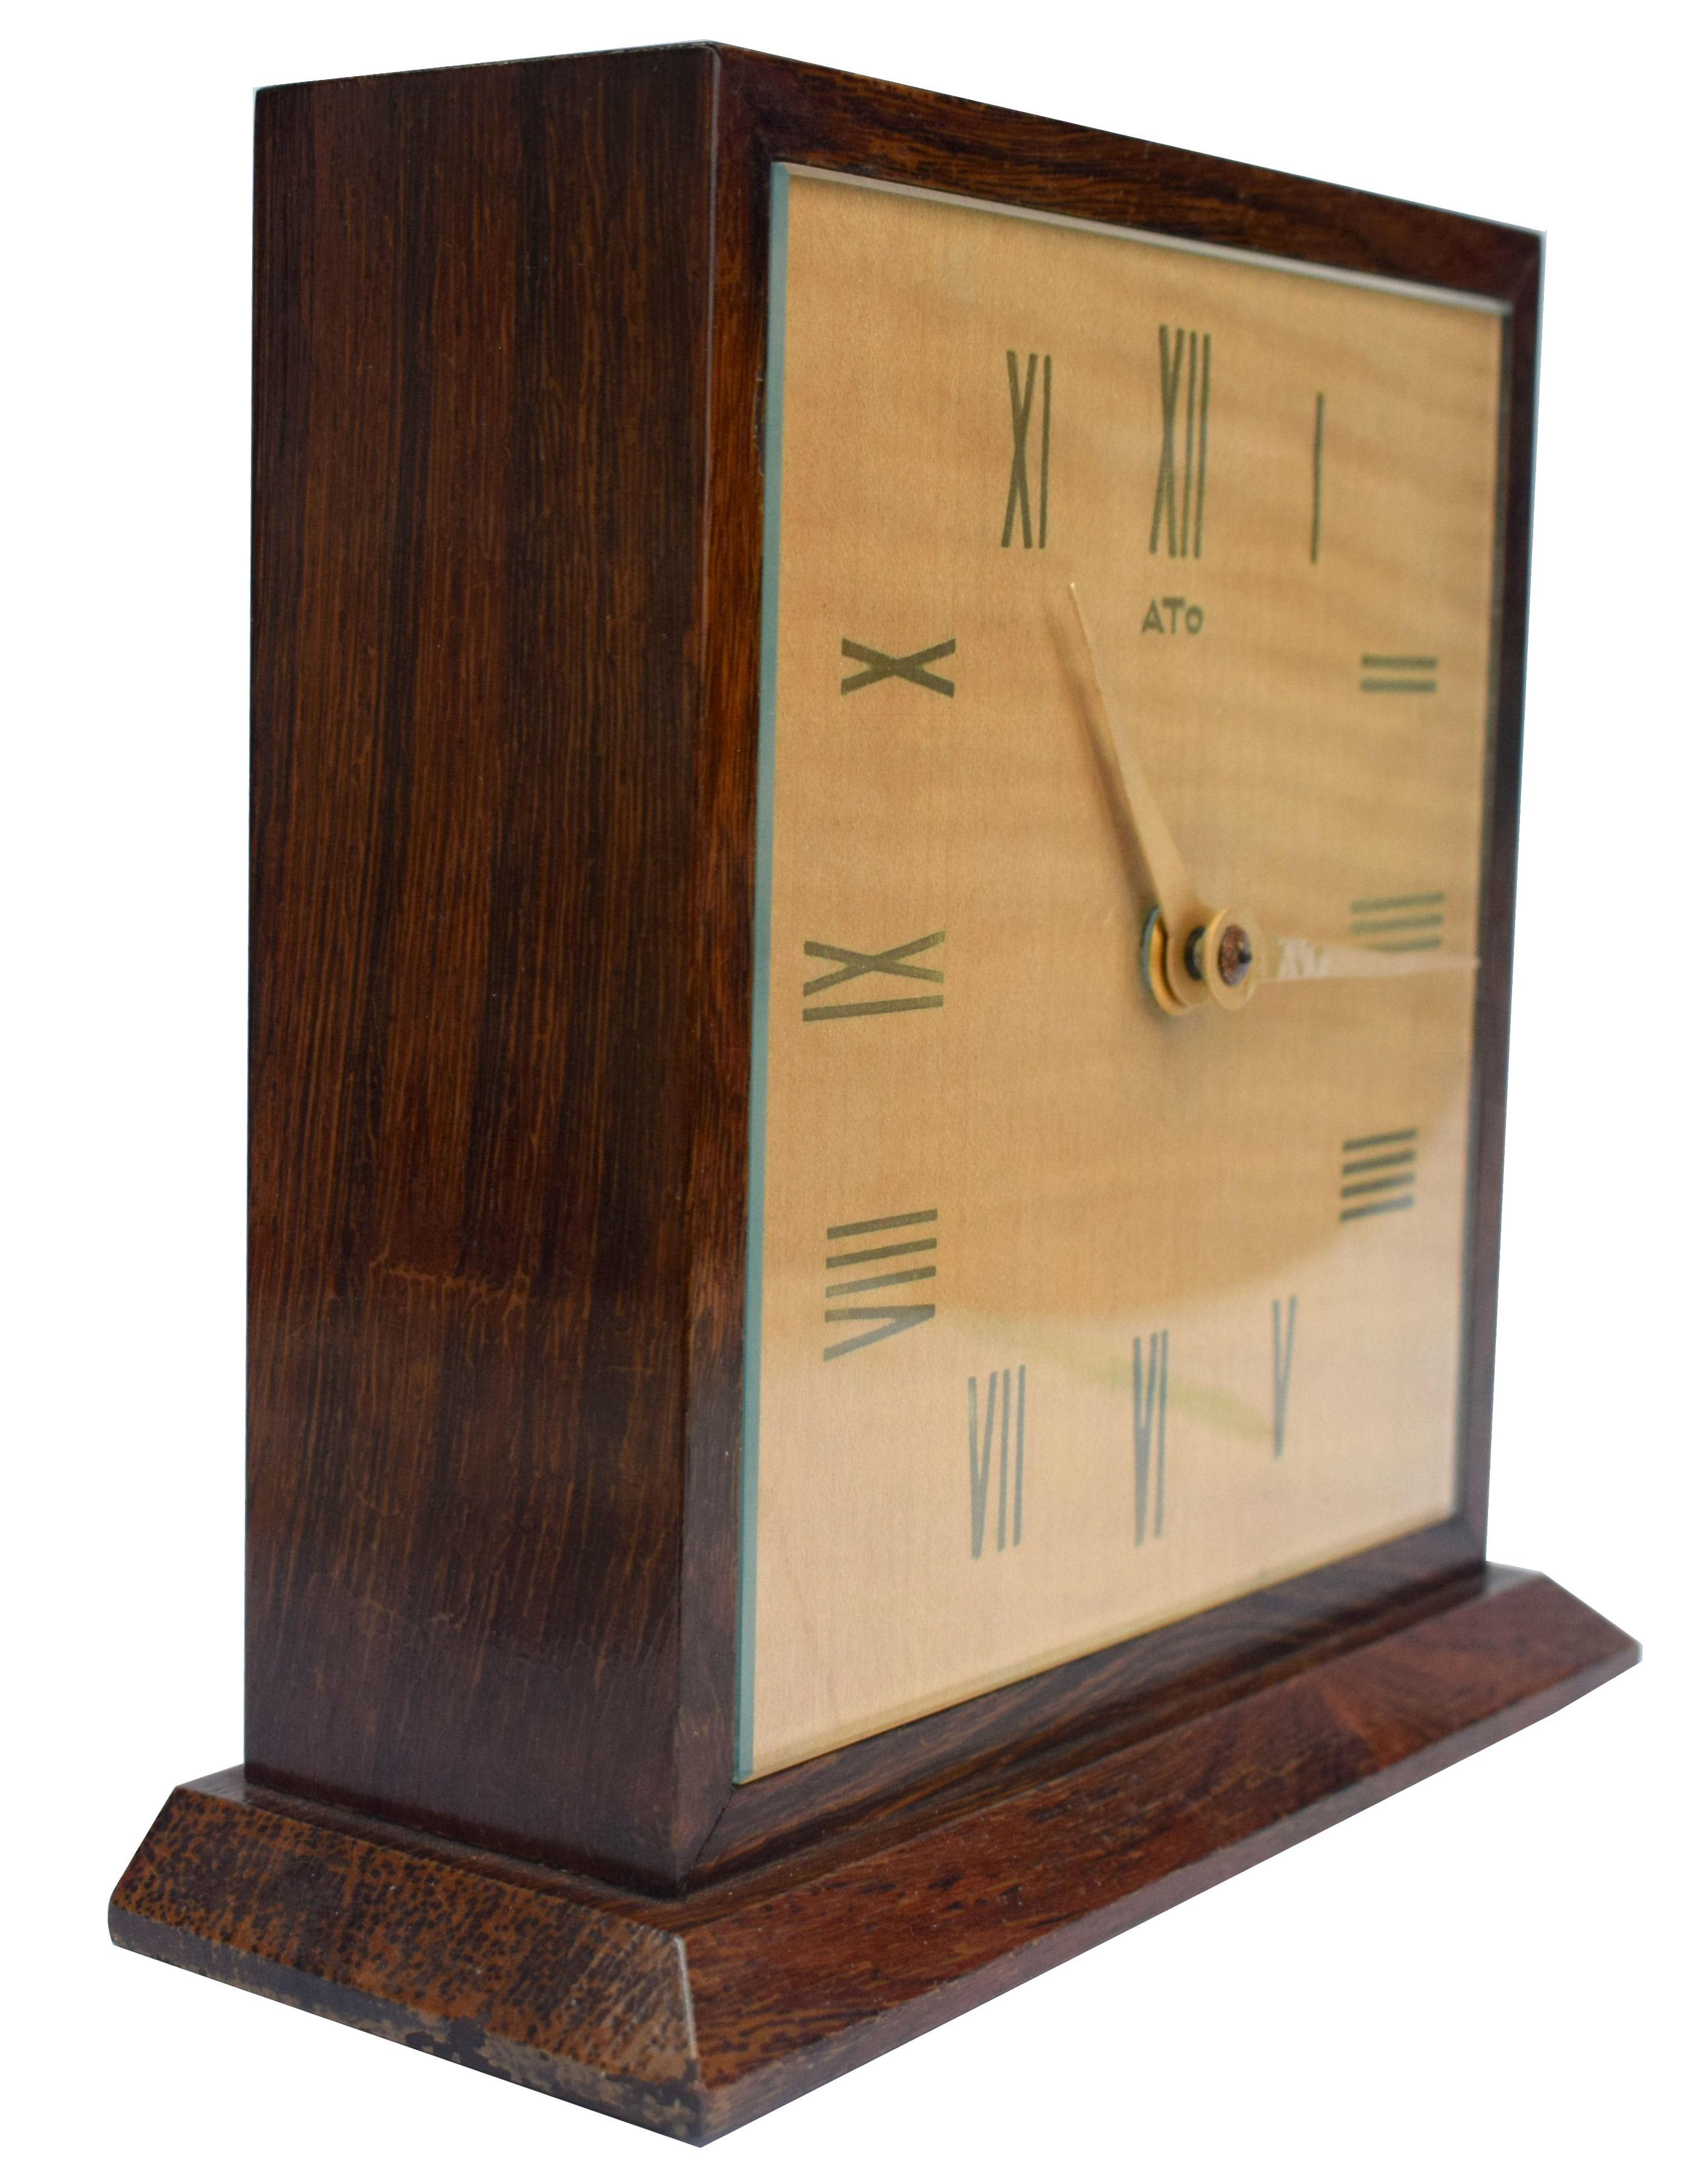 Art Deco Modernist Mantle Clock by ATO, 1930s 2